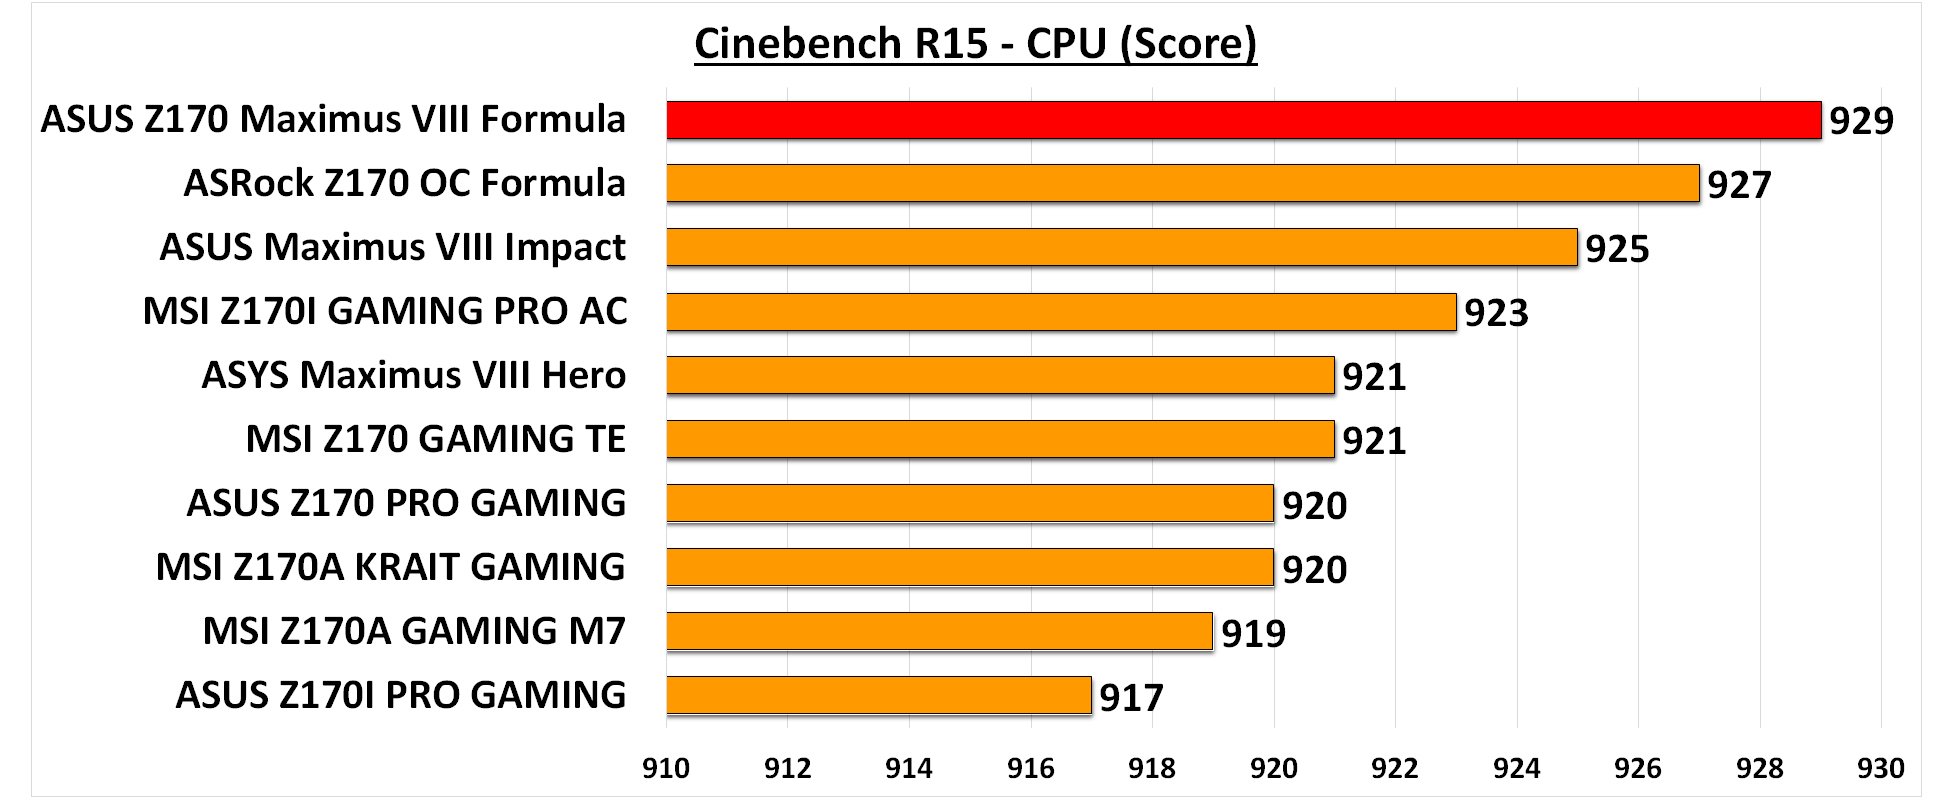 Cinebench R15 CPU